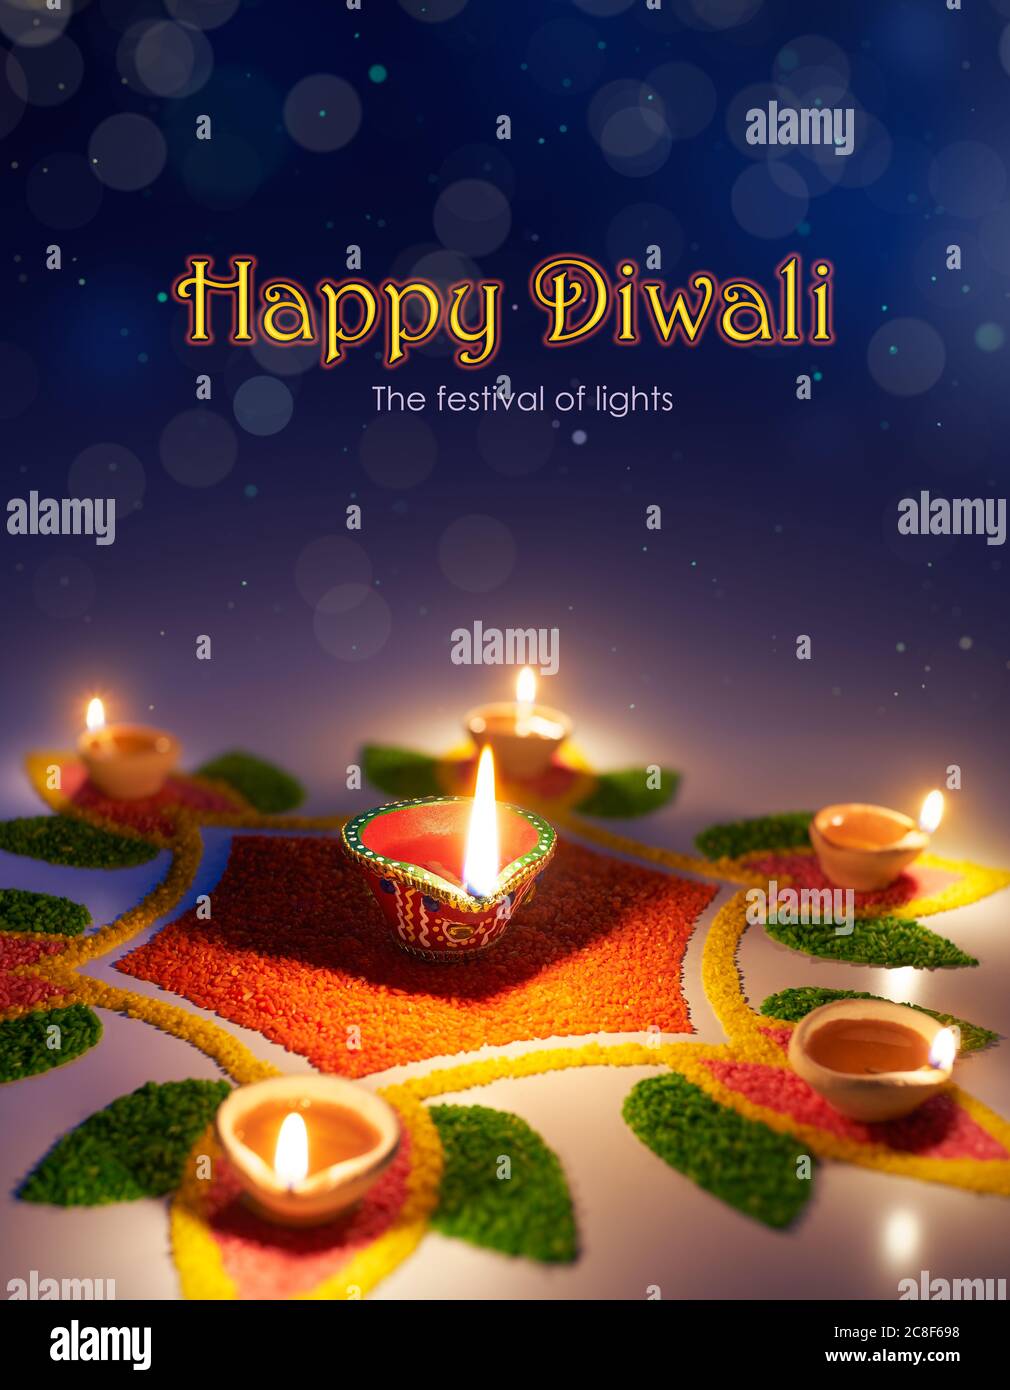 Happy Diwali, The festival of lights Stock Photo